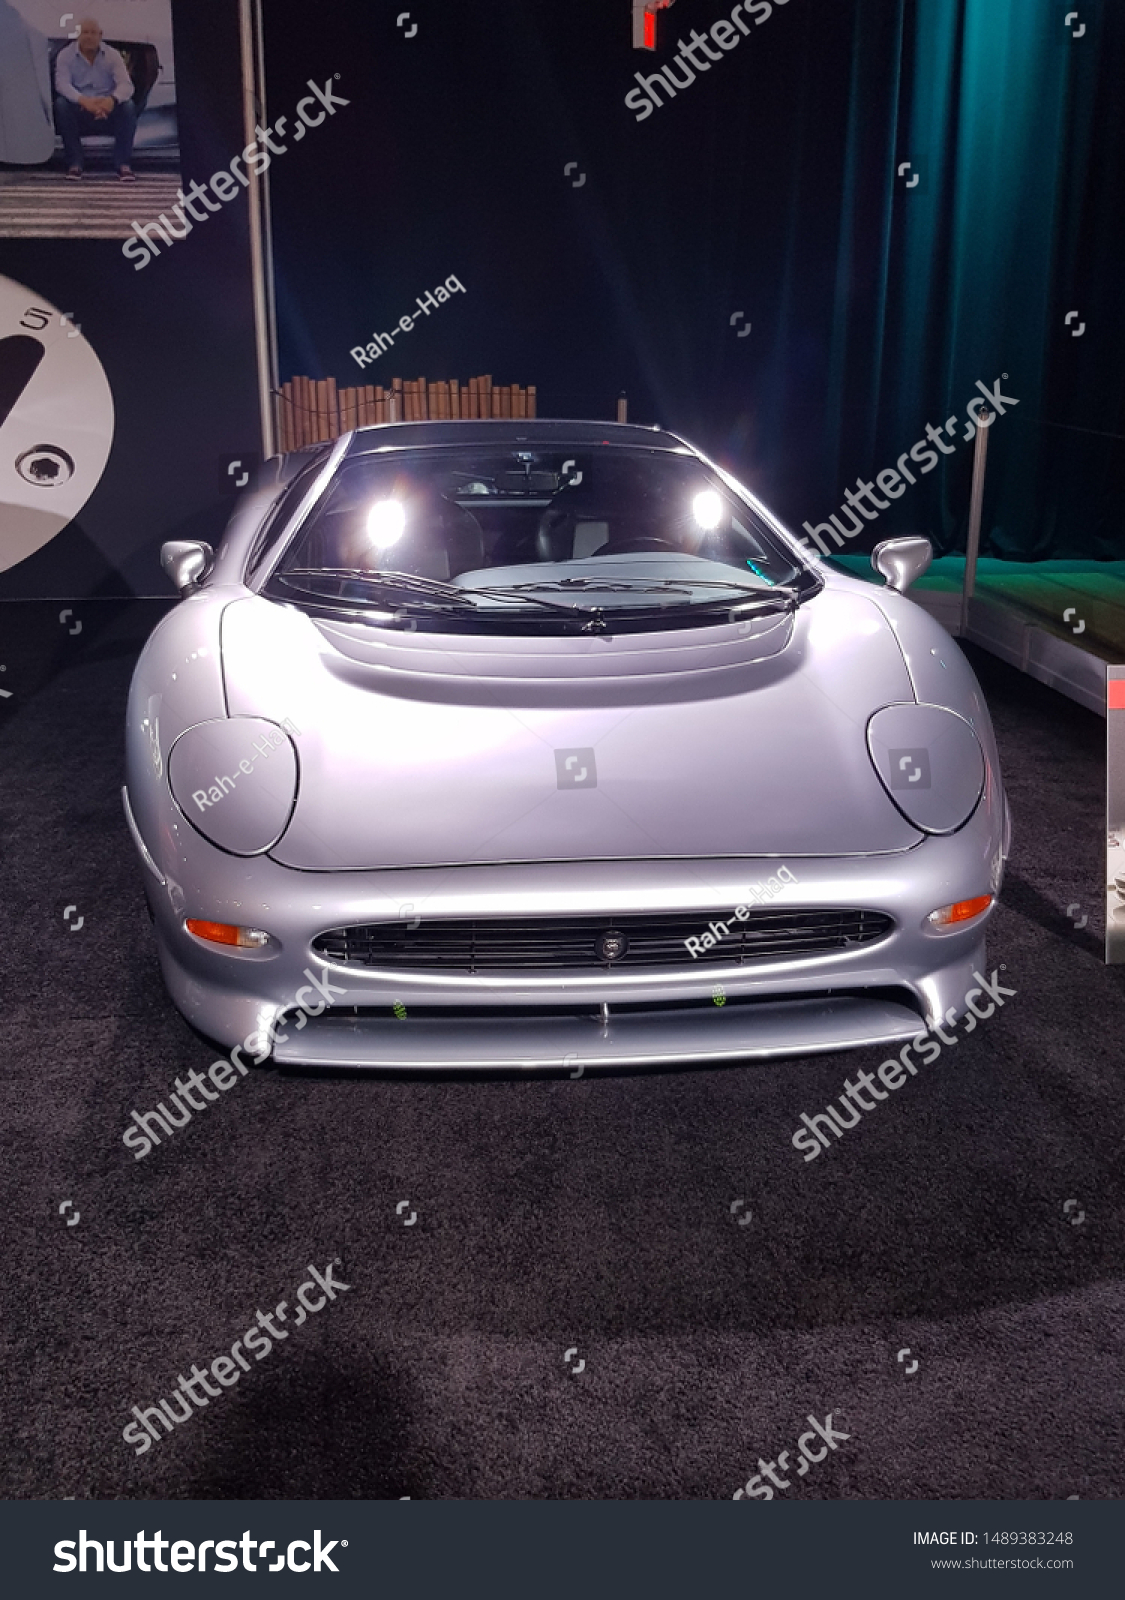 Jaguar Xj220 Toronto Auto Show 2019 Stock Photo Edit Now 1489383248